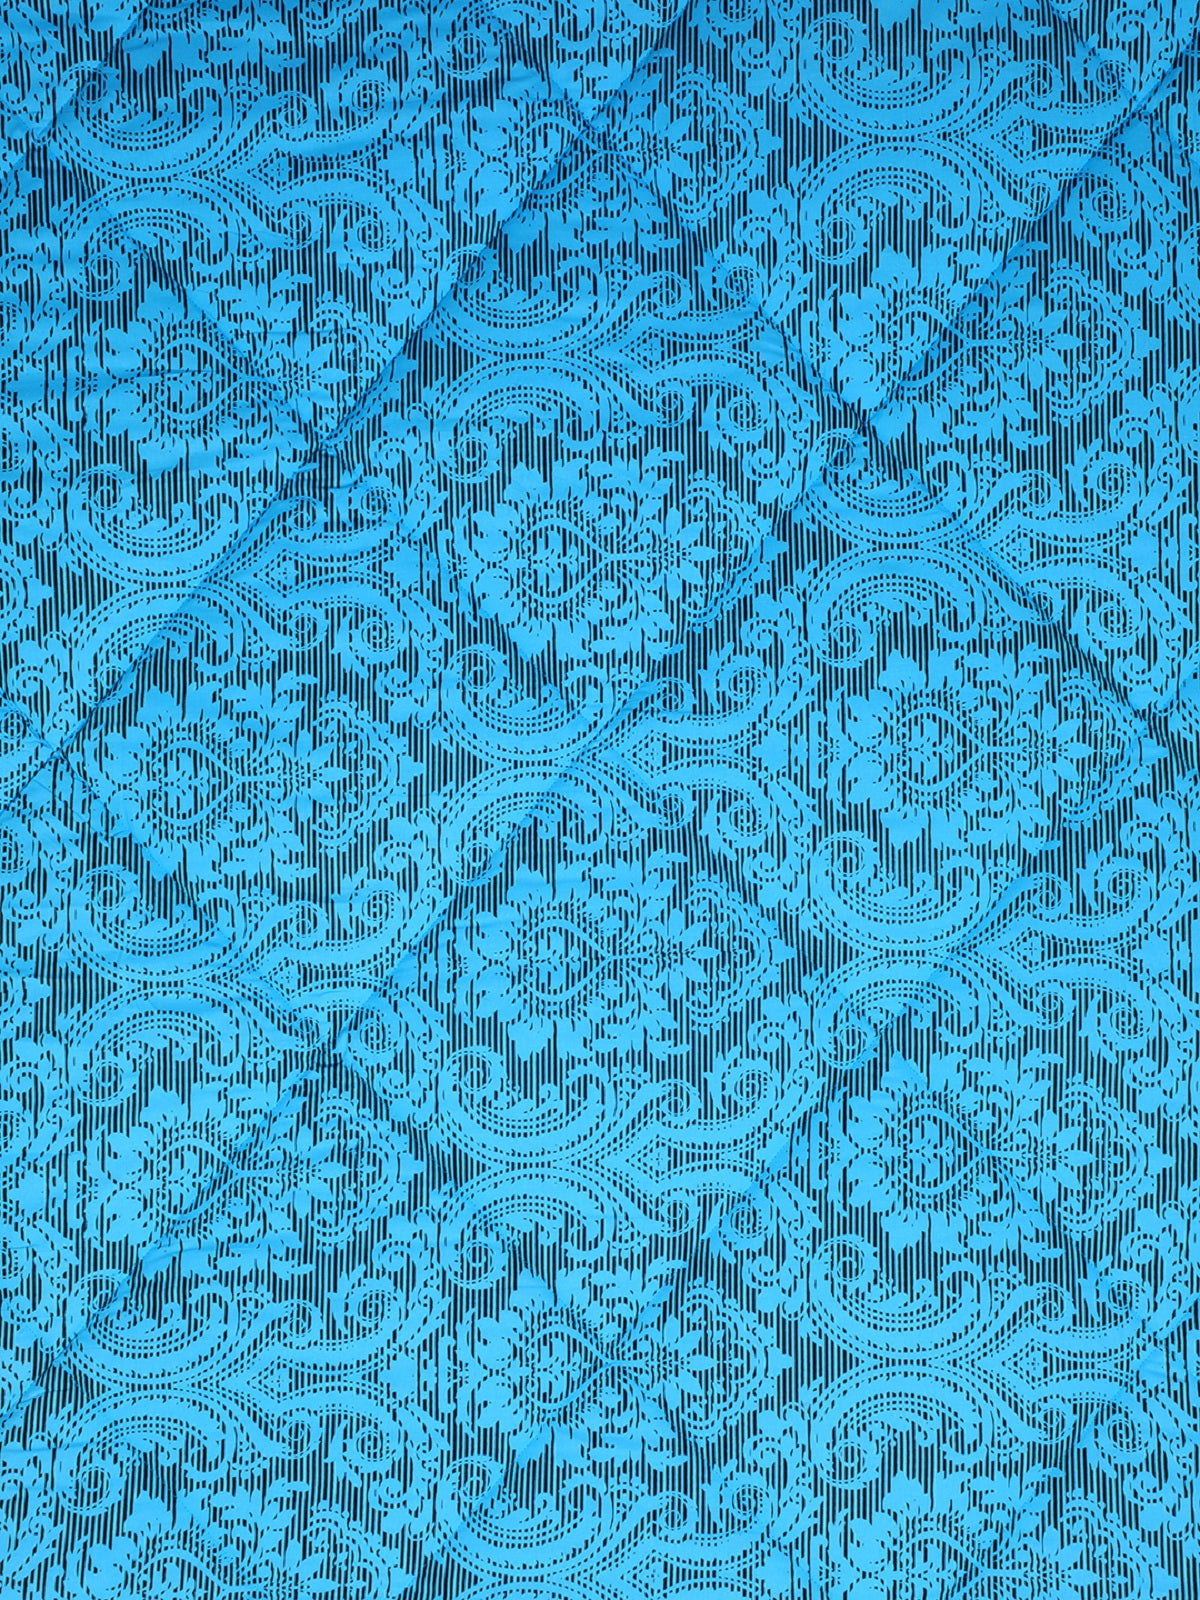 Romee Blue Ethnic Motifs Patterned 250 Gsm Reversible Ac Comforter